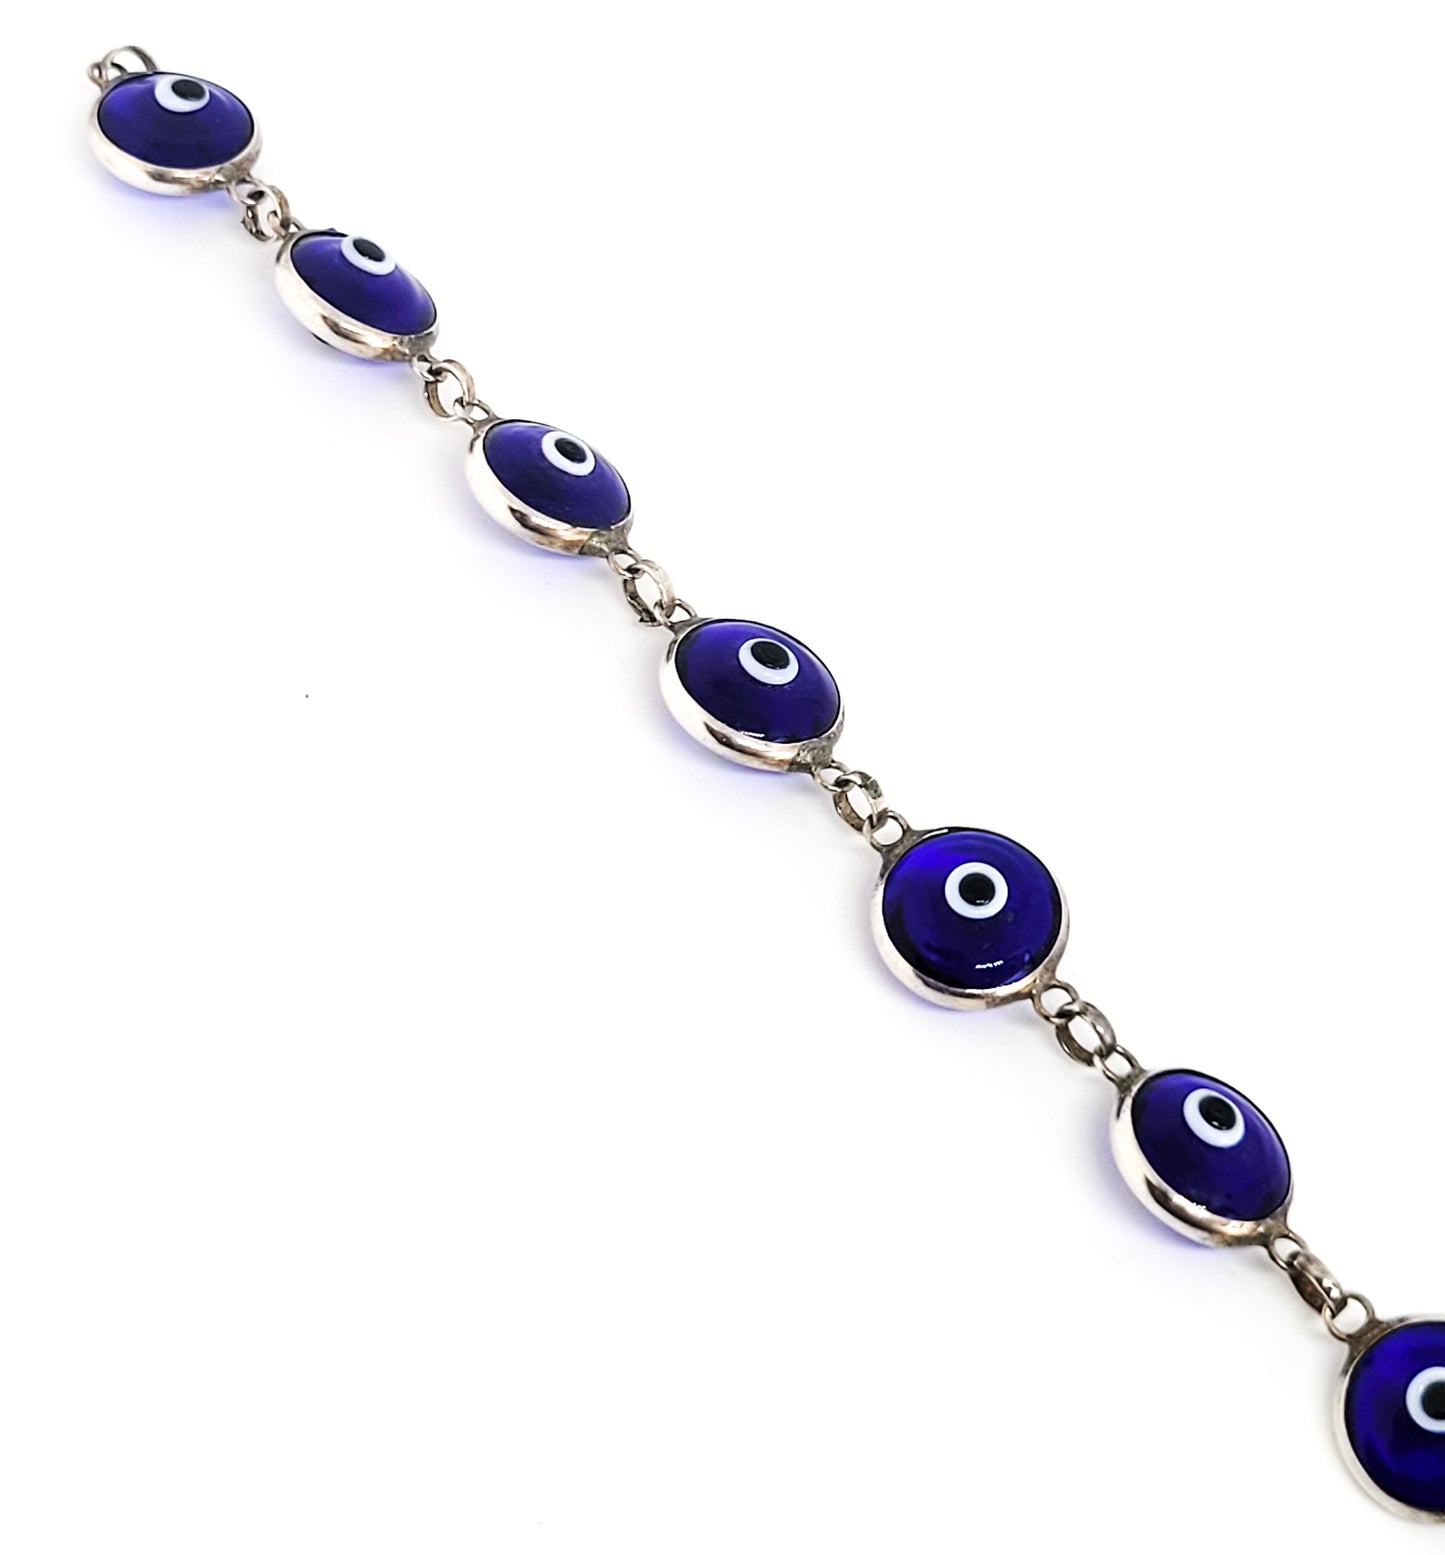 Evil eye blue glass sterilng silver protection tennis bracelet 7.75 inches 925